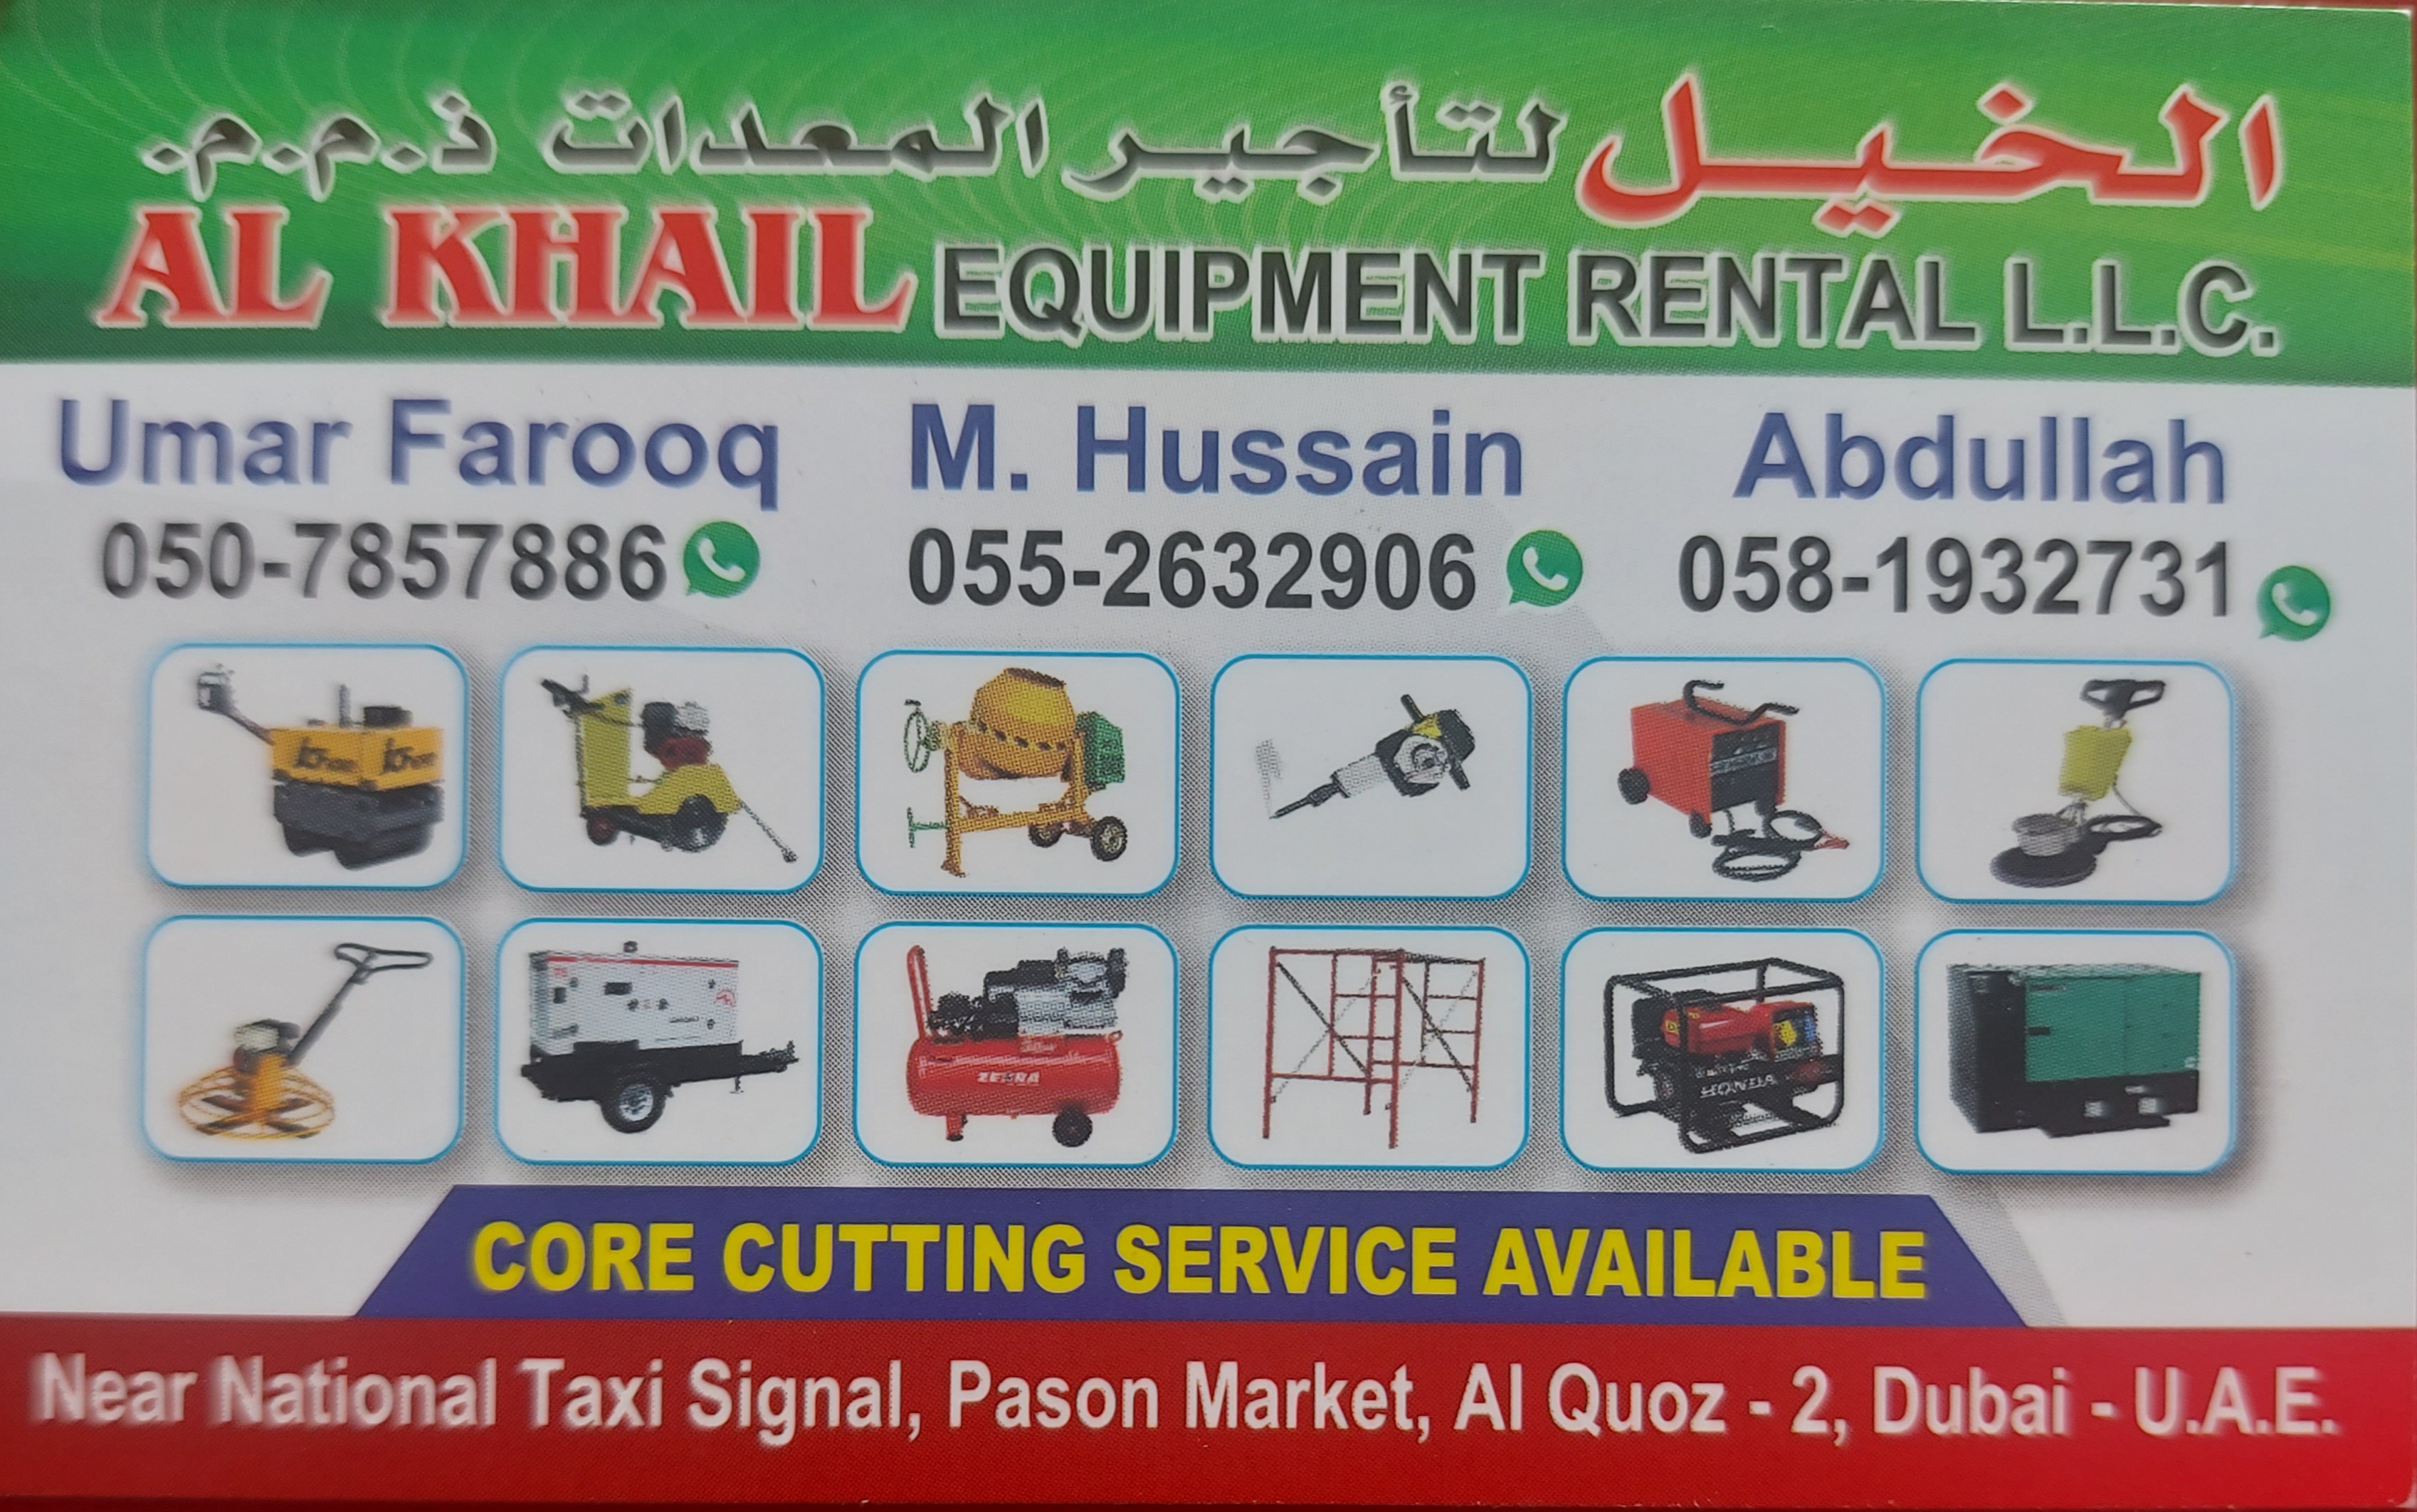 Al Khail Equipment Rental LLC